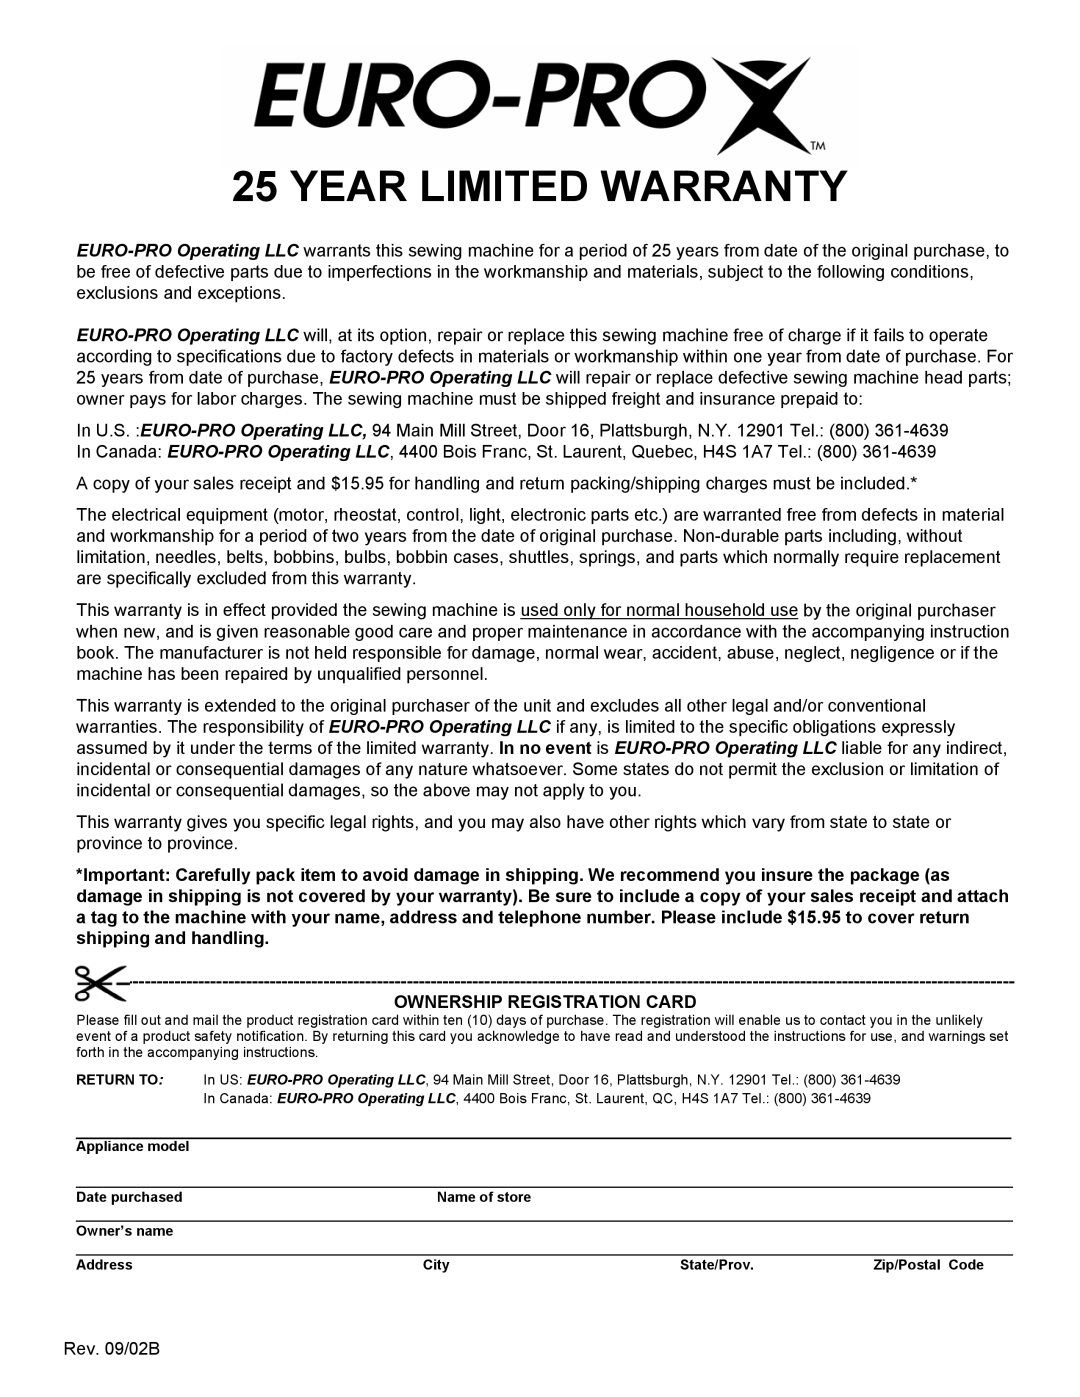 Euro-Pro 372H instruction manual Year Limited Warranty 